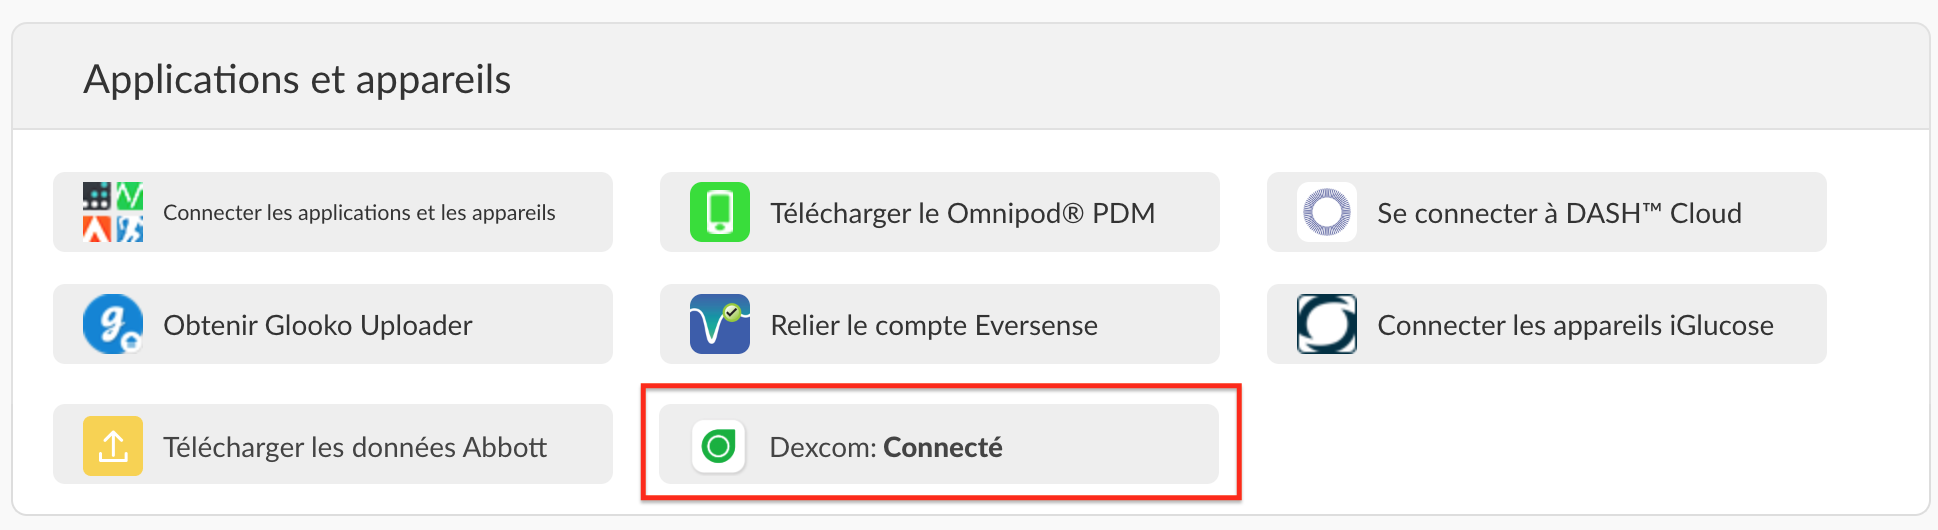 french-web-dexcomconnectednew.png